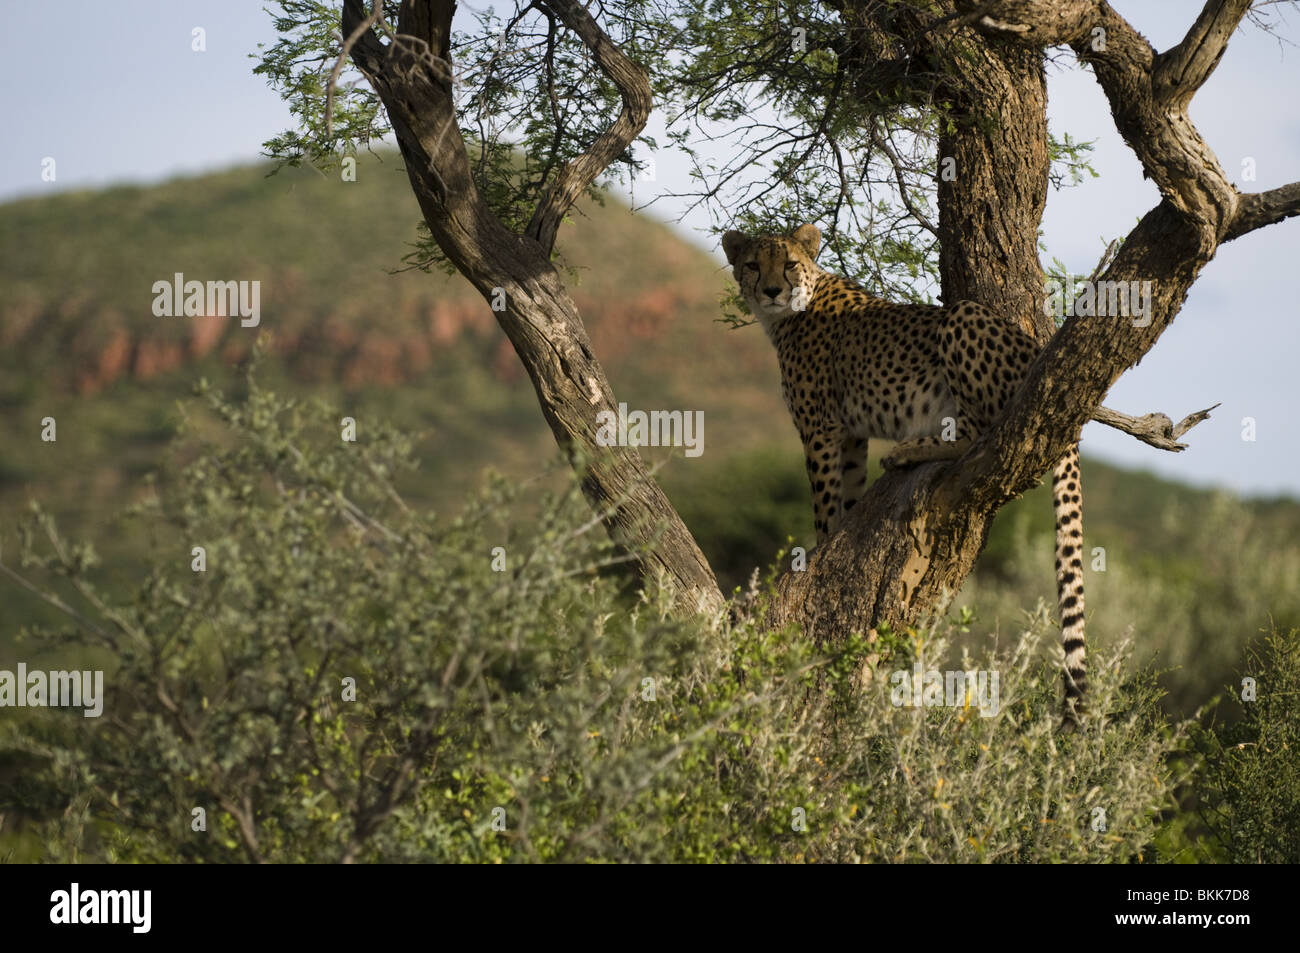 Cheetah using a tree to survey it's surroundings, Okonjima, Namibia. Stock Photo